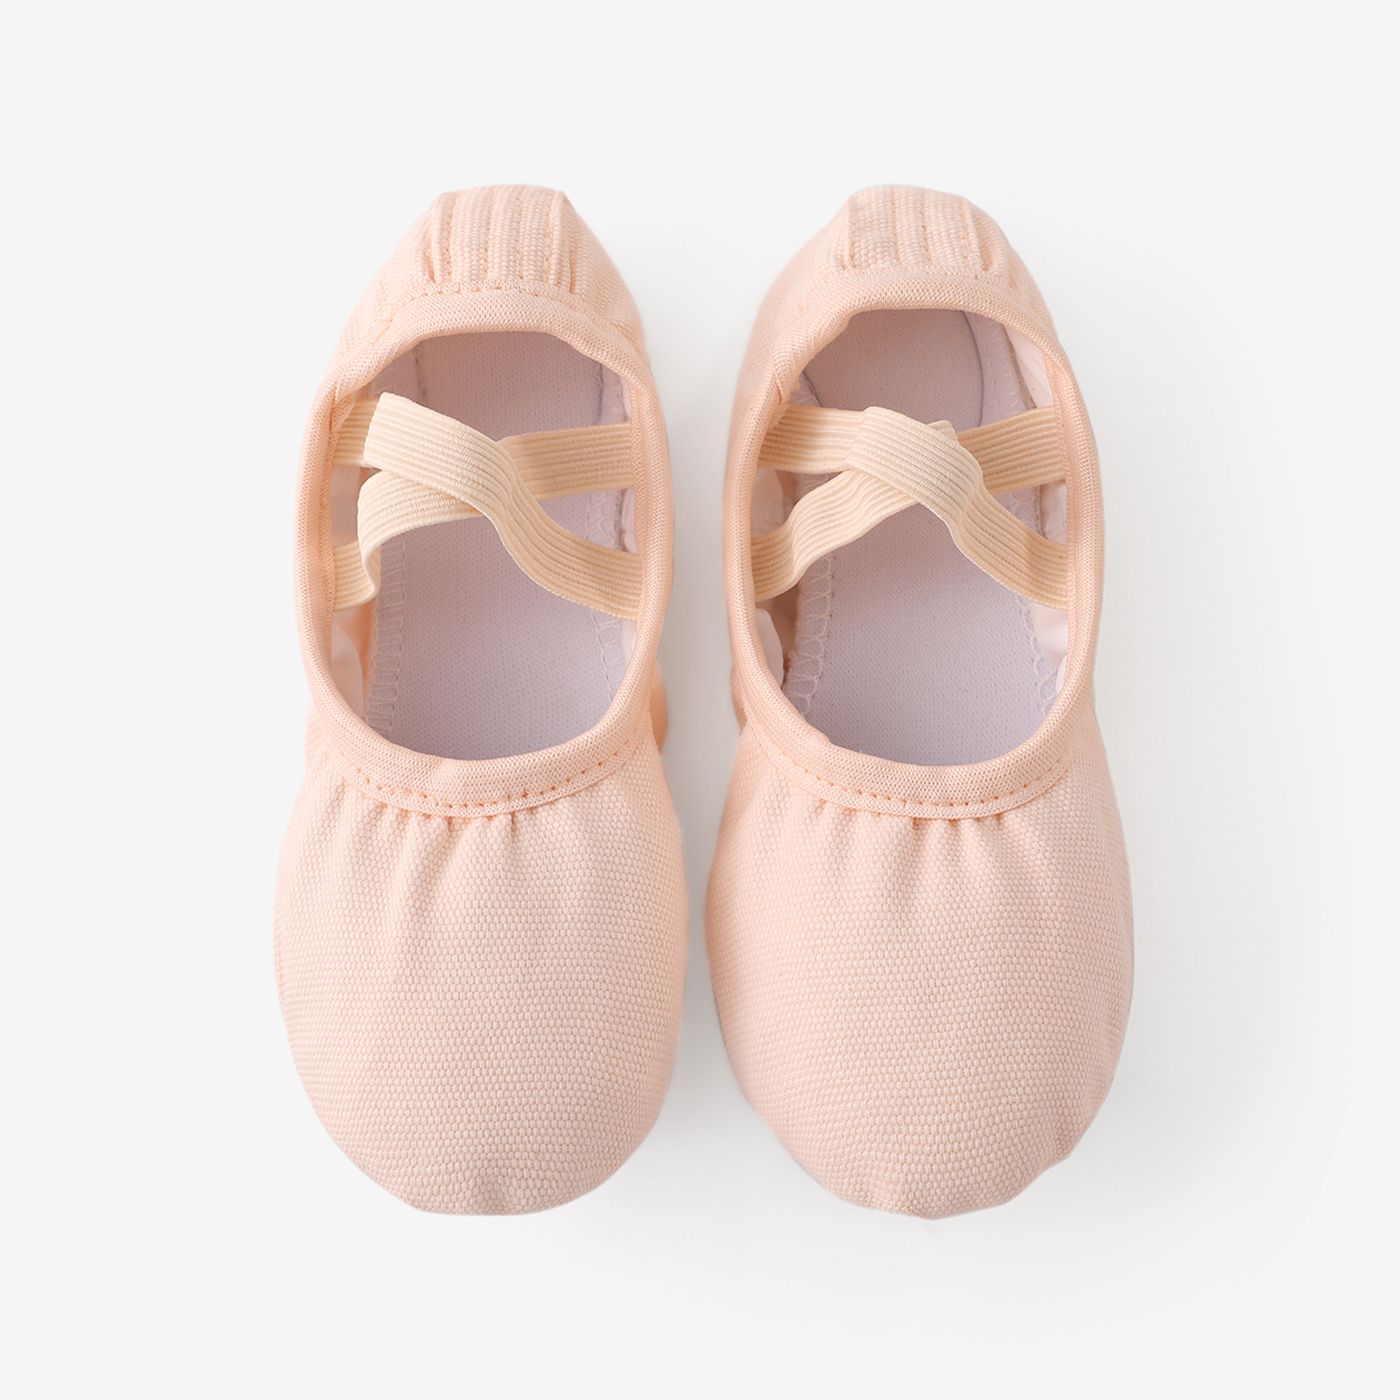 Toddler & Kid Beautiful Cross Strap Ballet Dance Shoes